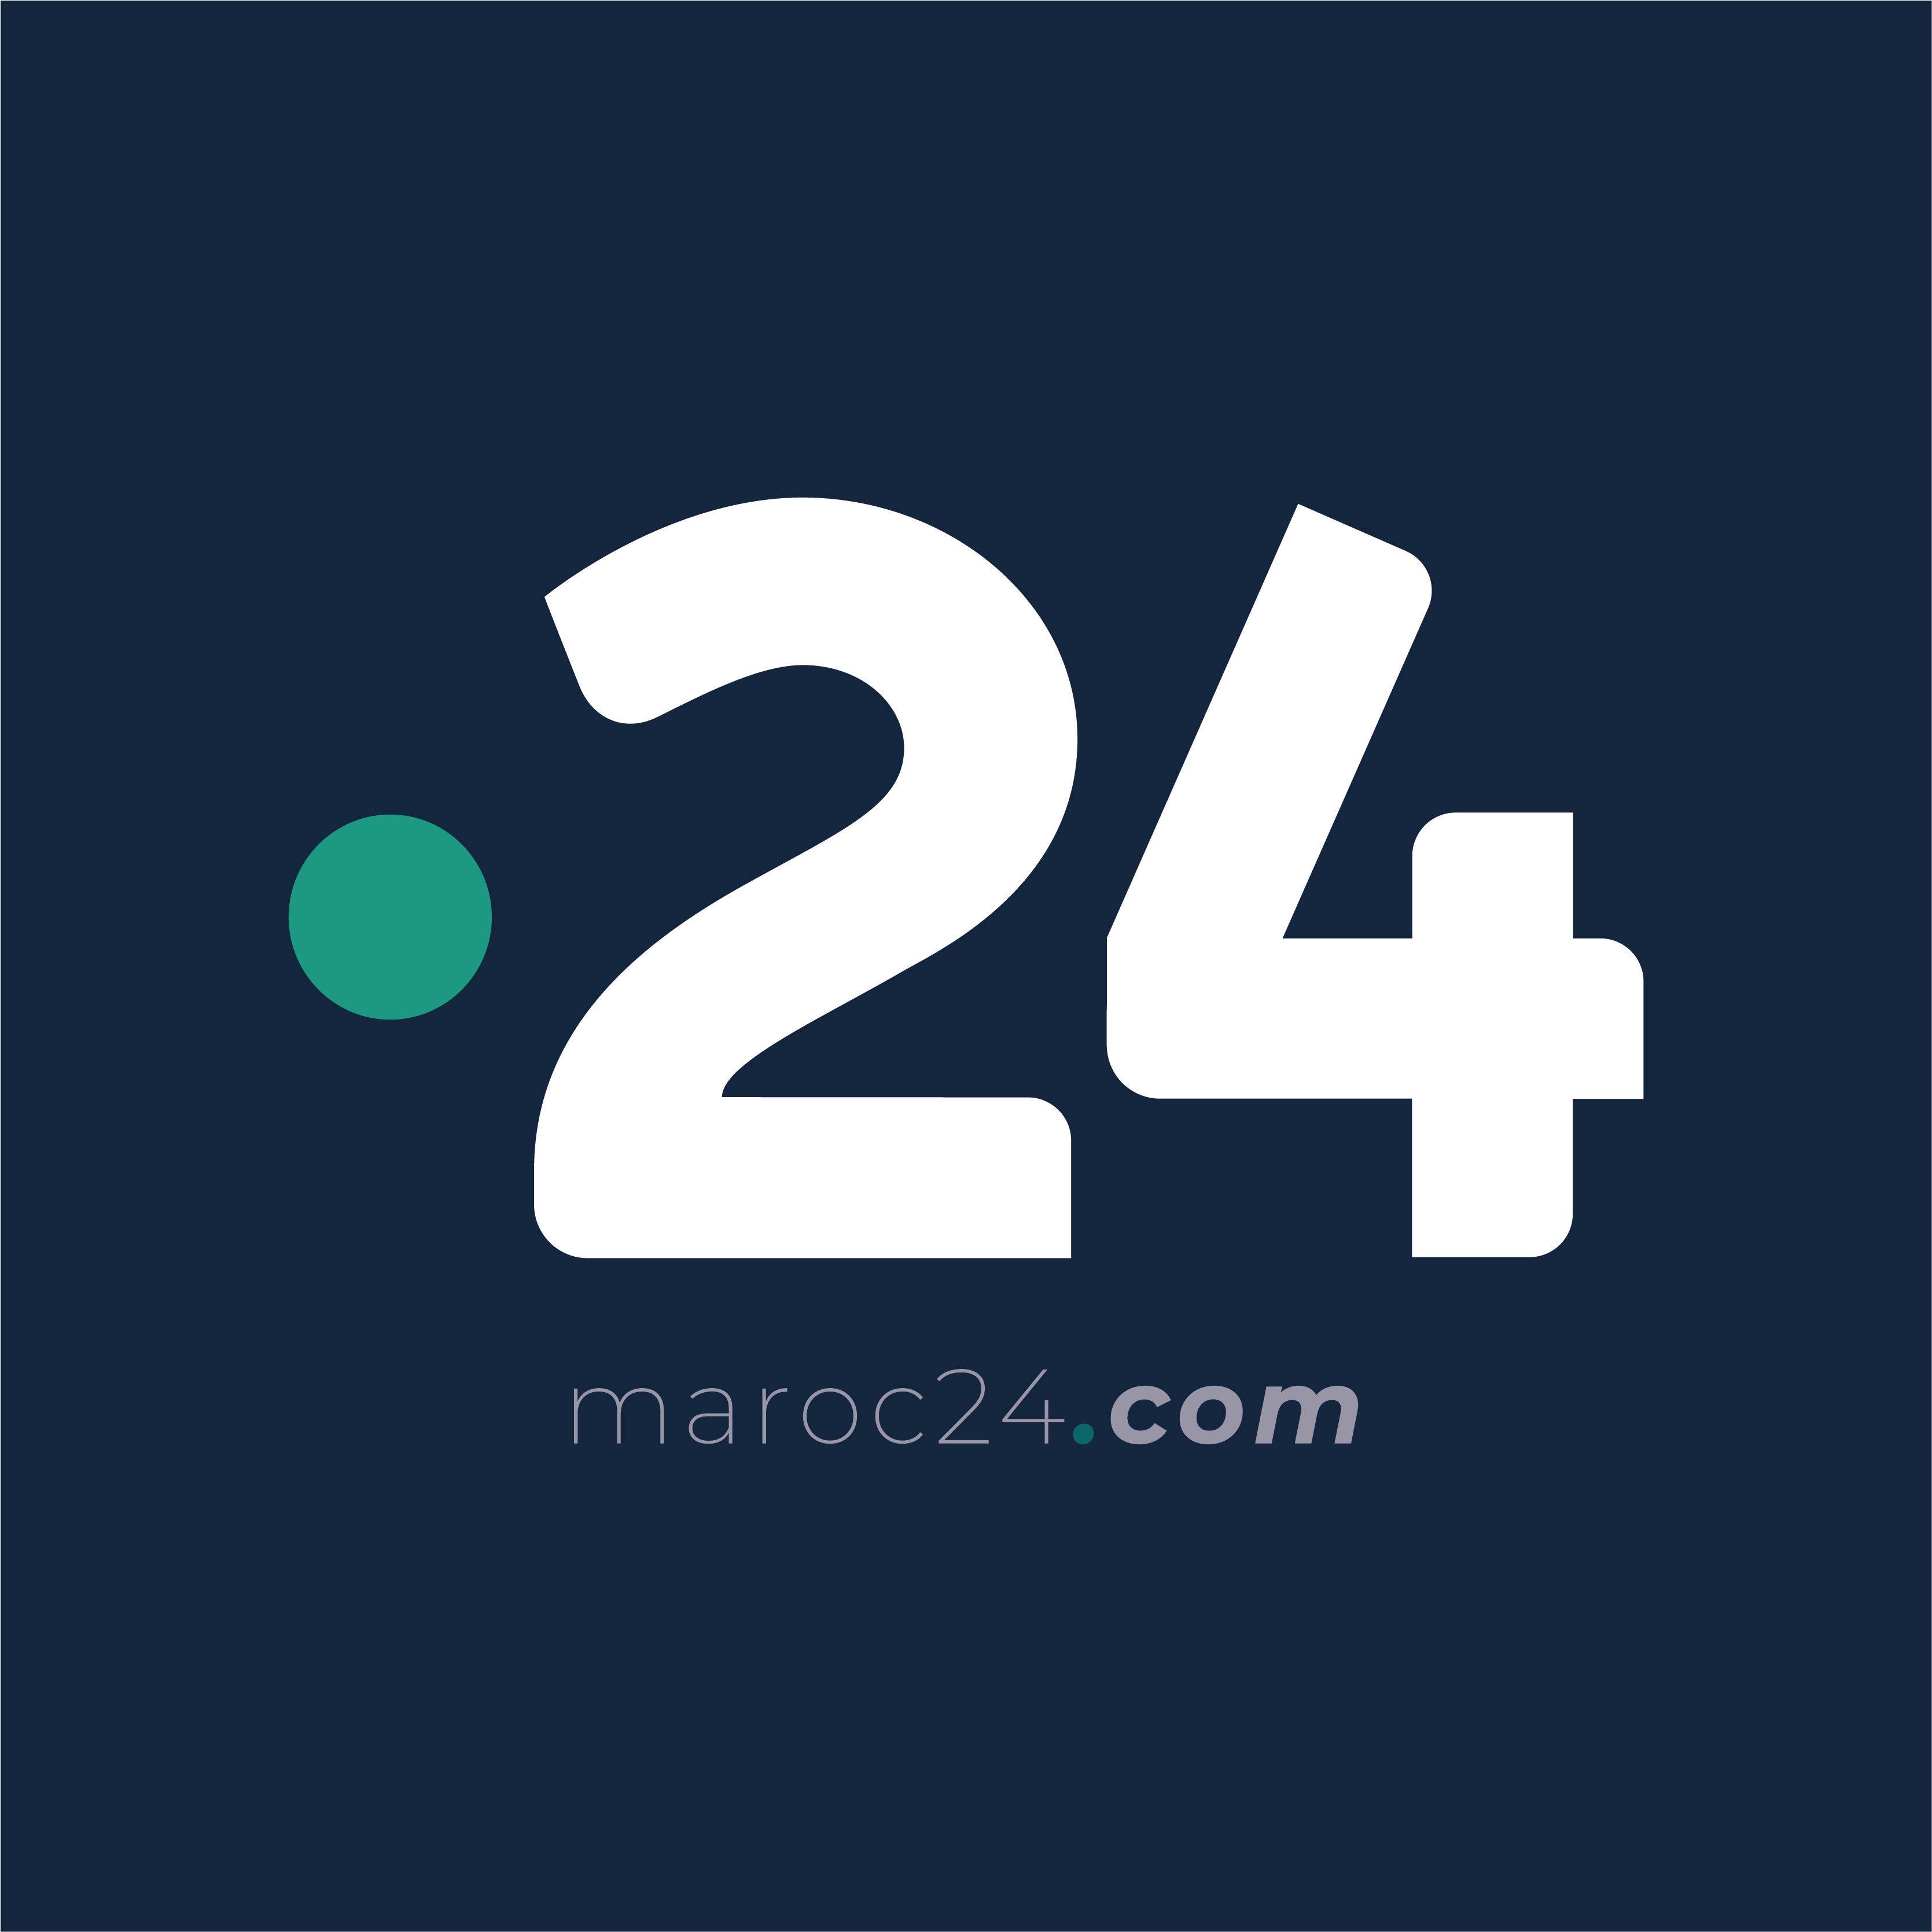 Maroc24.com